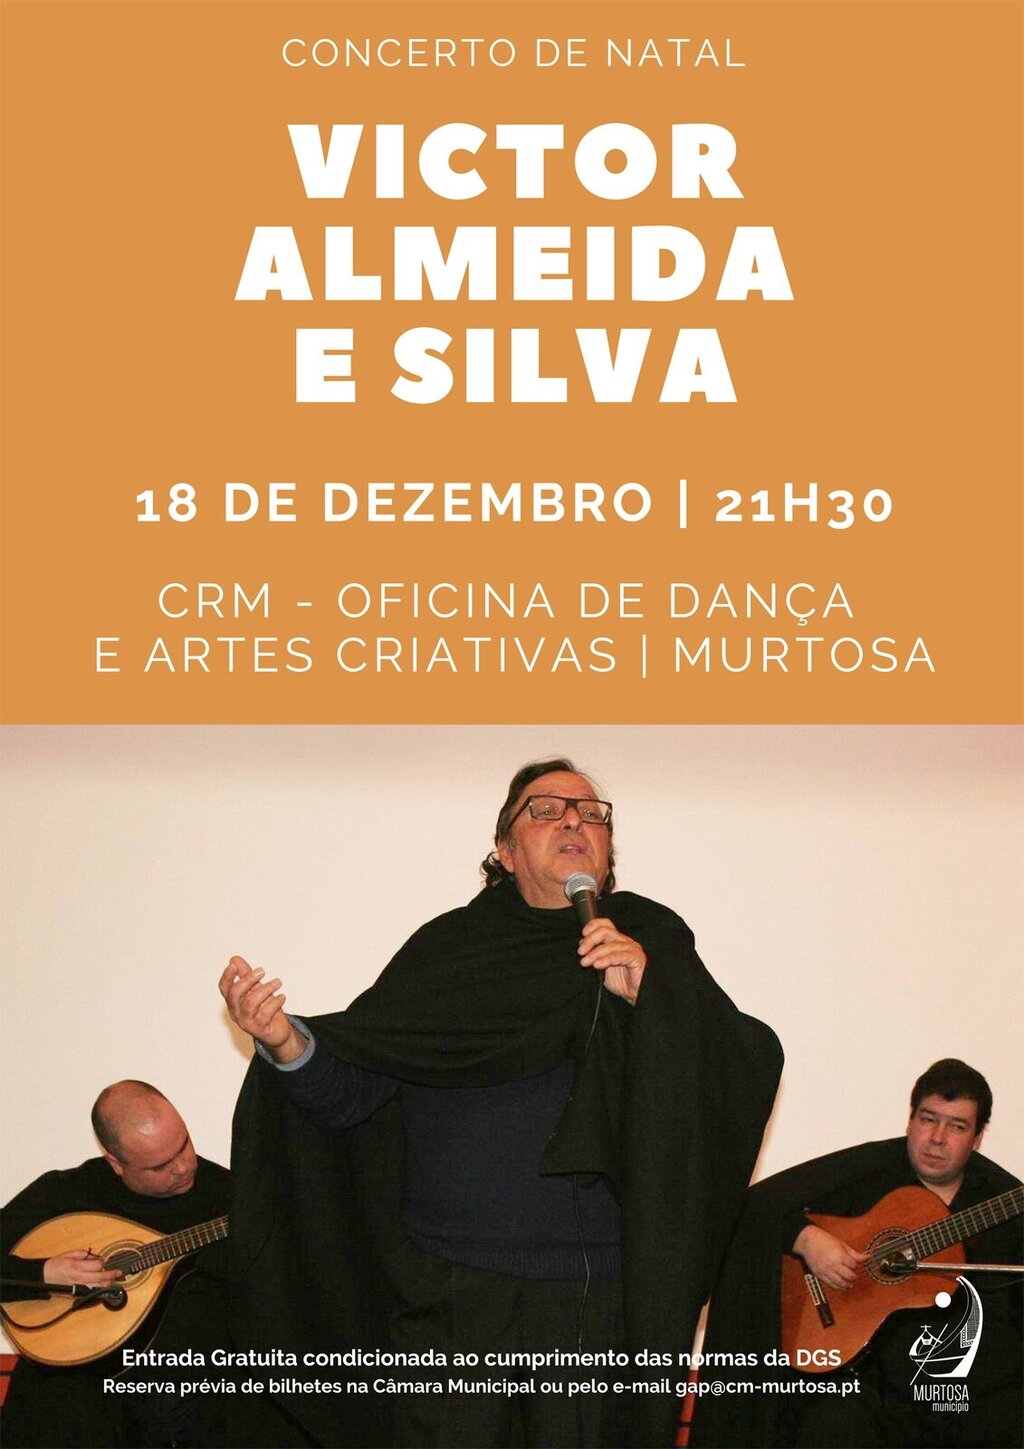 Concerto de Natal com Victor Almeida e Silva